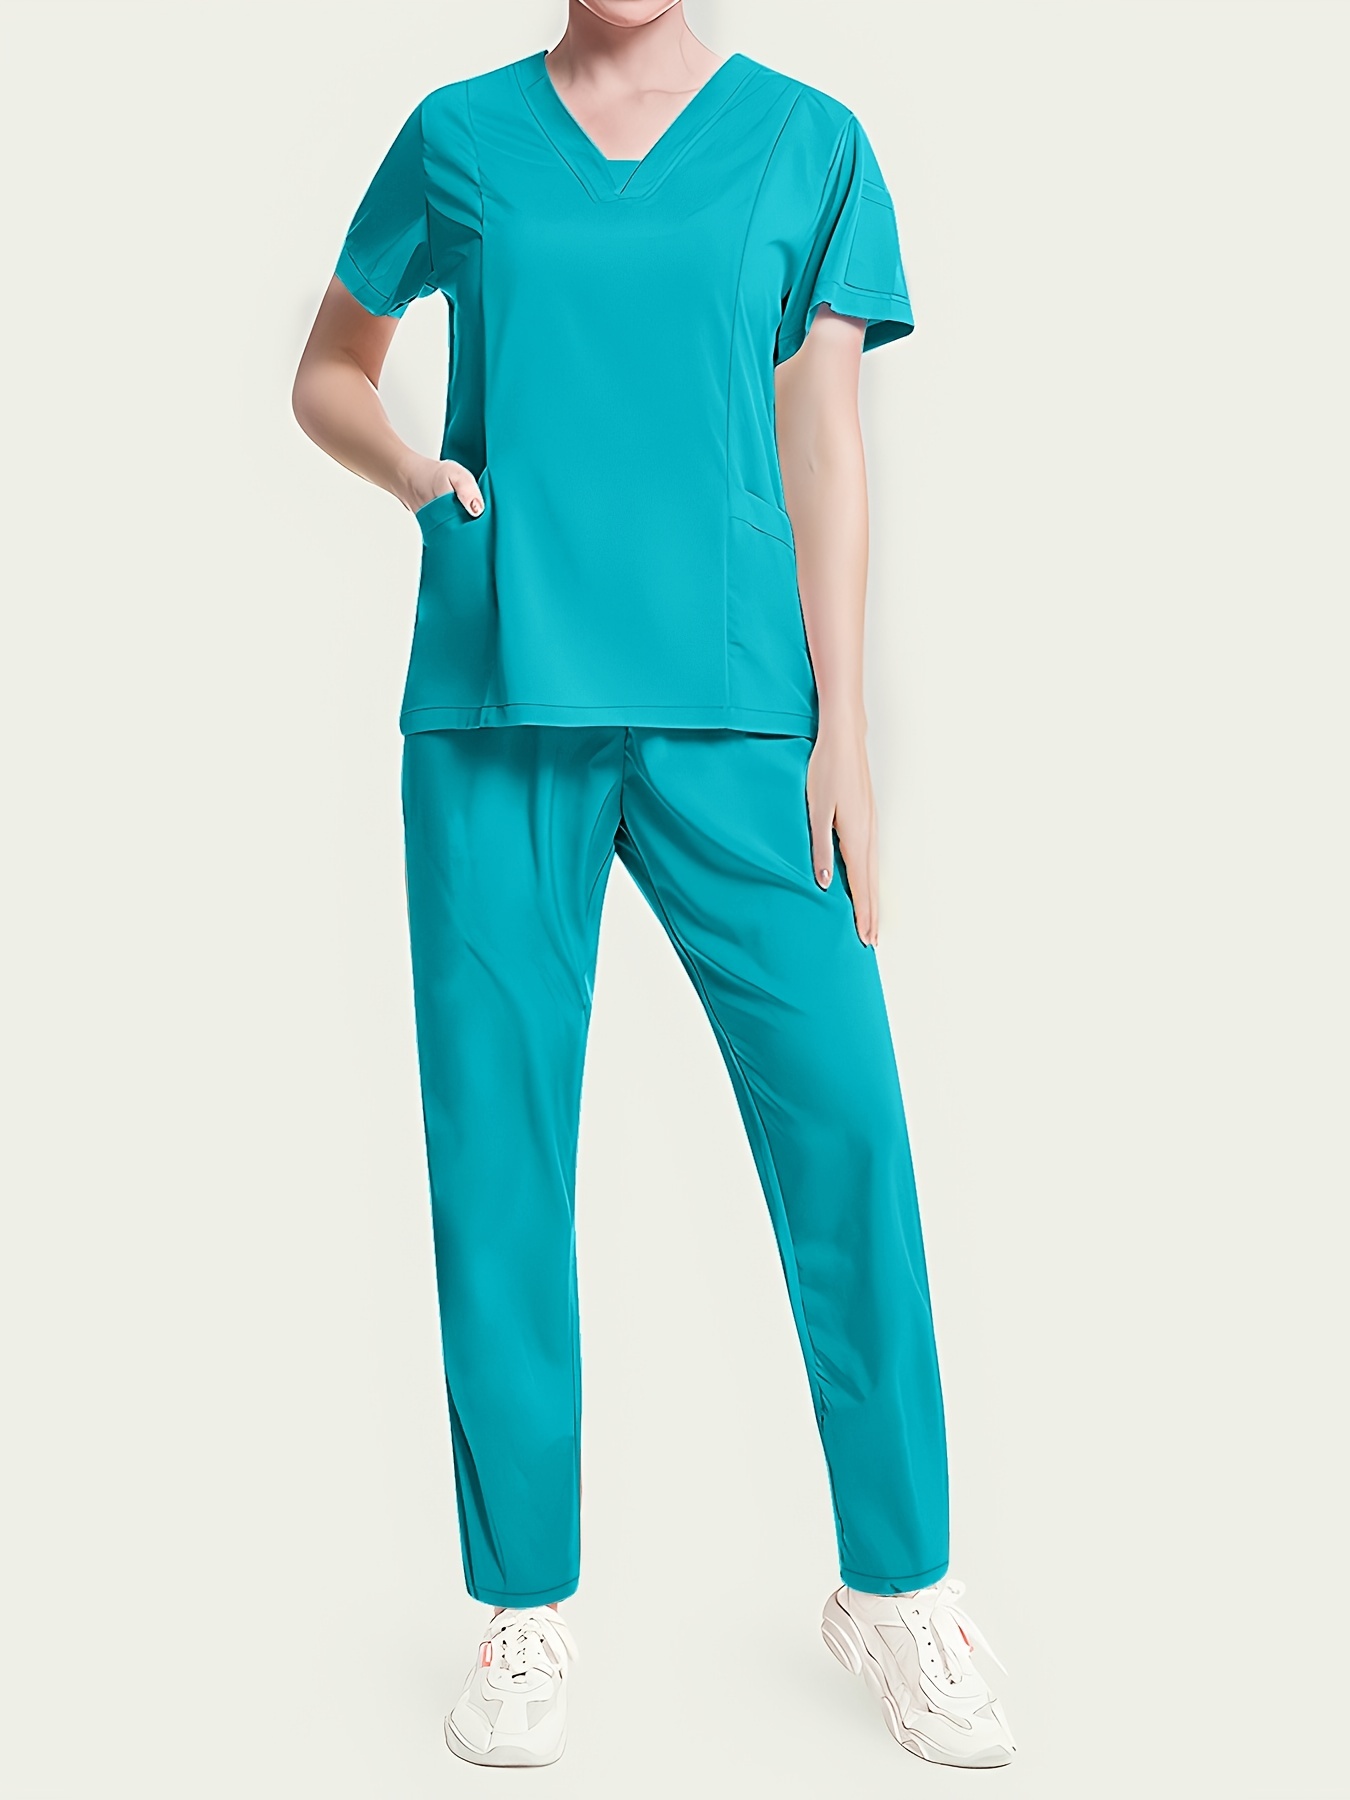 Nurse Uniform Women Short Sleeve Set Working Uniform Blouse Scrubs